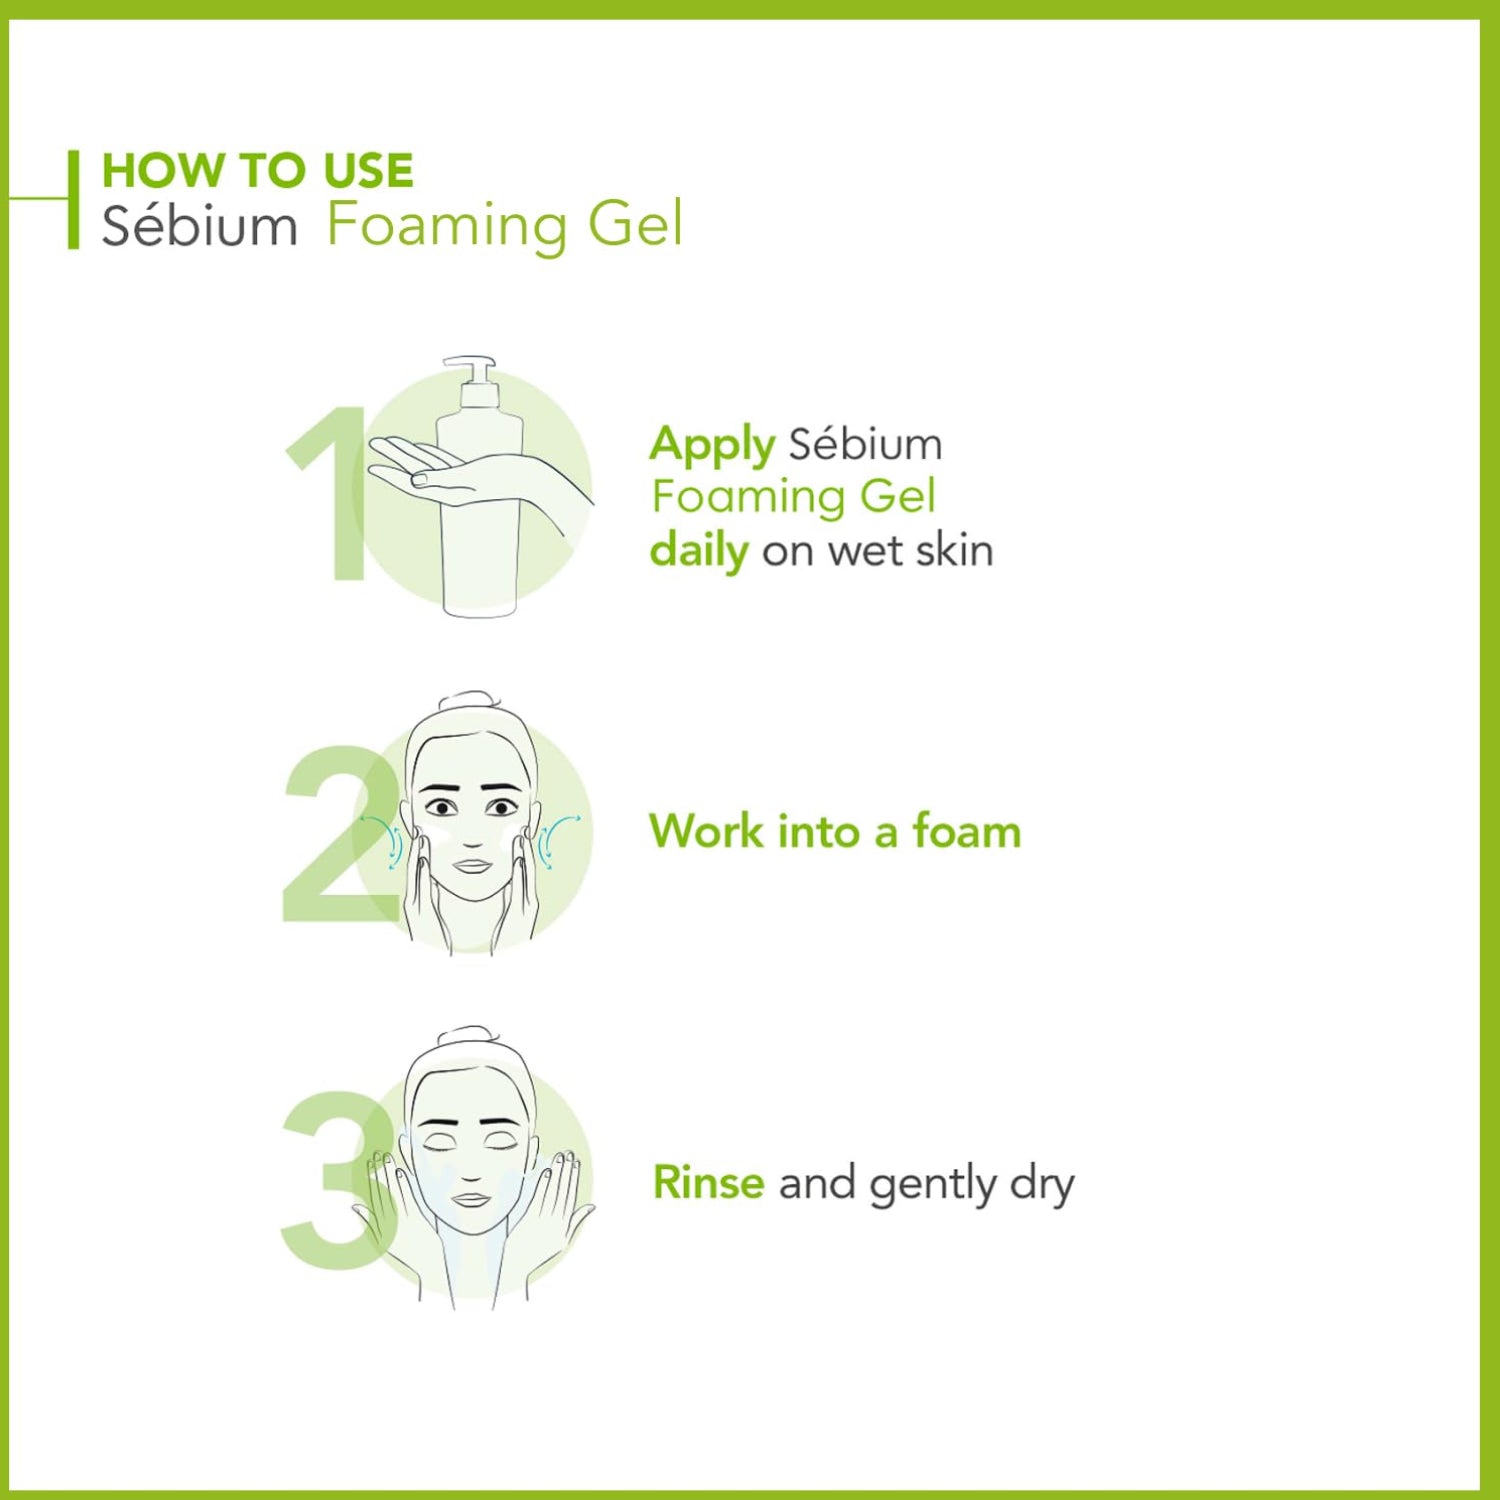 Bioderma Sebium Purifying Cleansing Foaming Gel - Combination to Oily Skin, 500ml